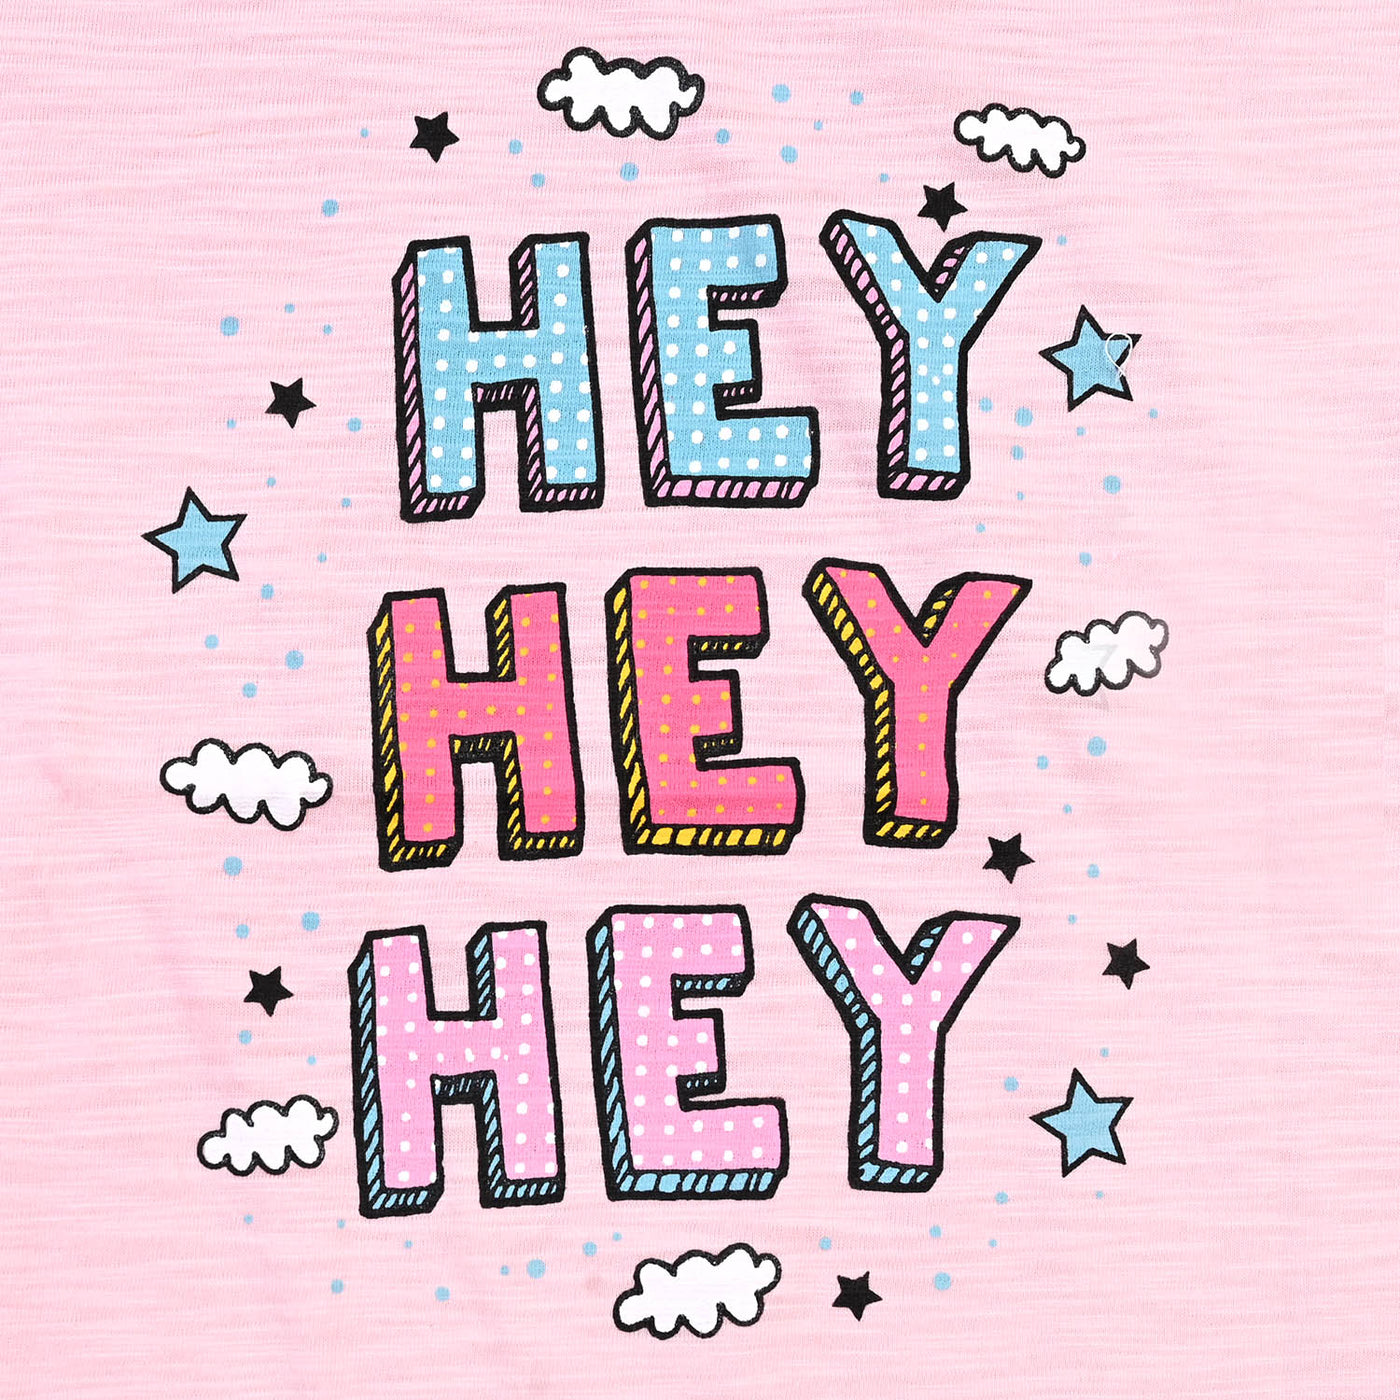 Girls Cotton T-Shirt Hey Hey Hey - Light Pink